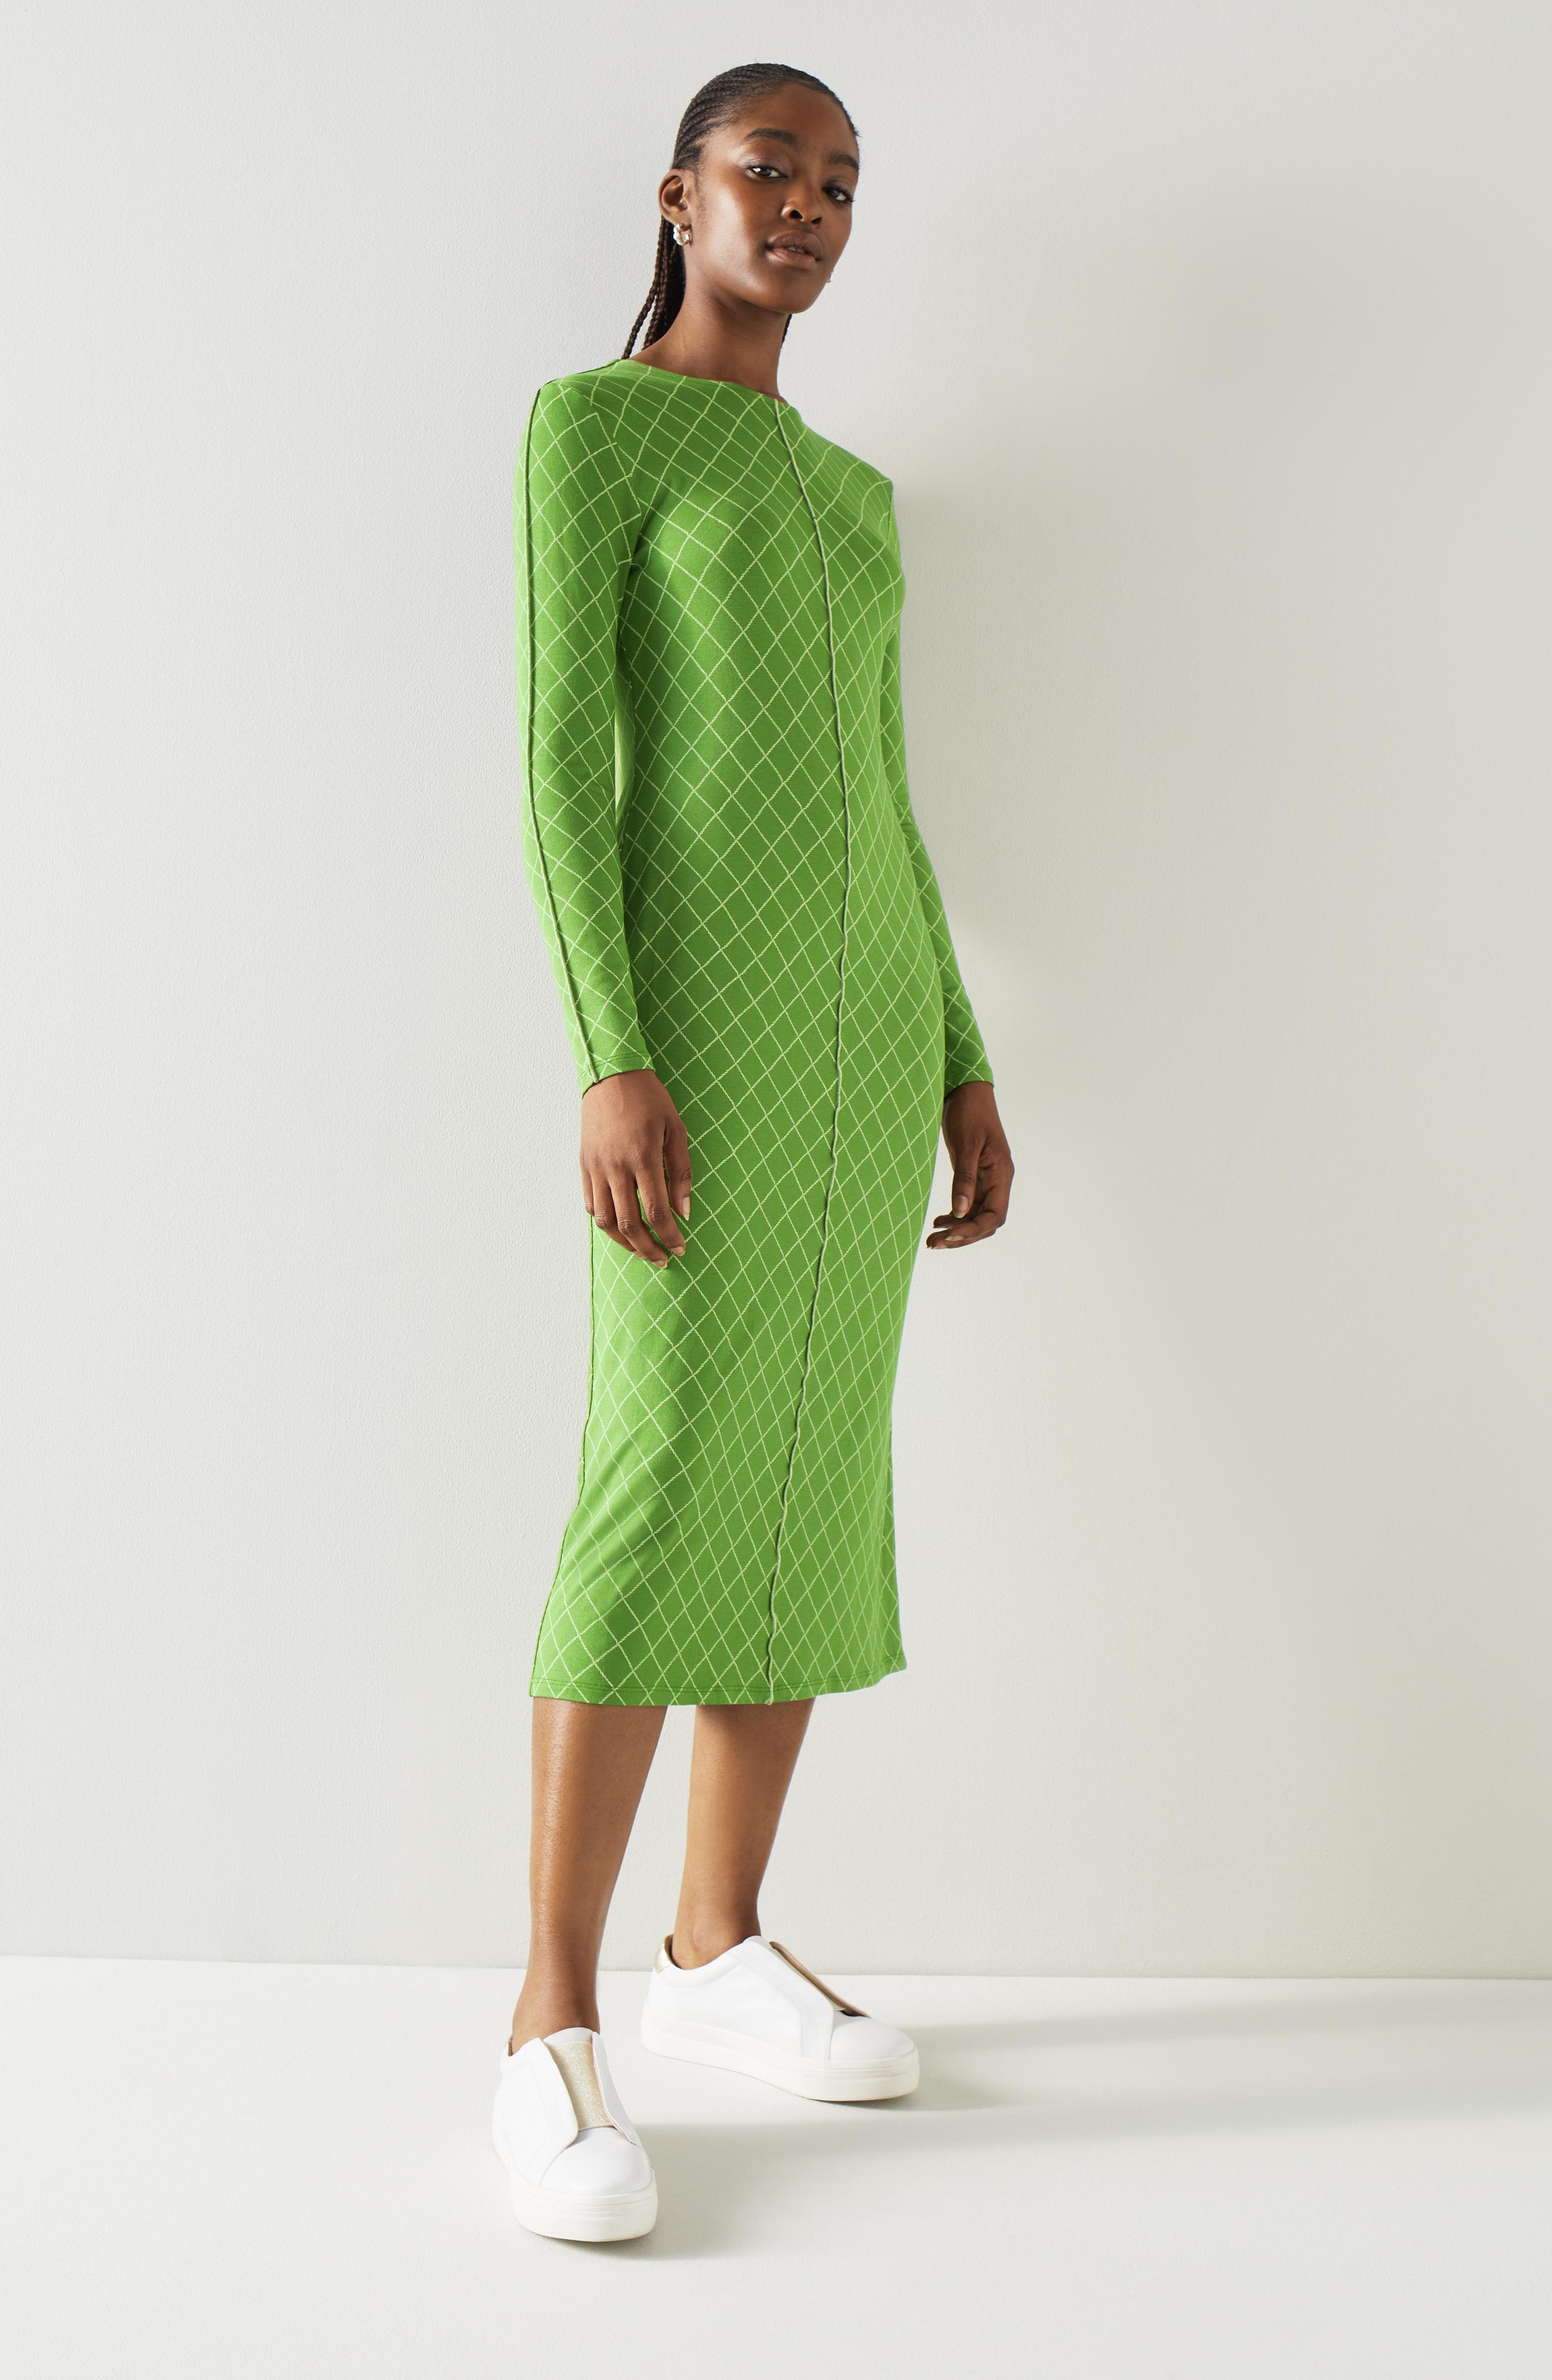 L.K.Bennett Annie Green Diamond Print  Dress with  LENZING ECOVERO viscose, Green